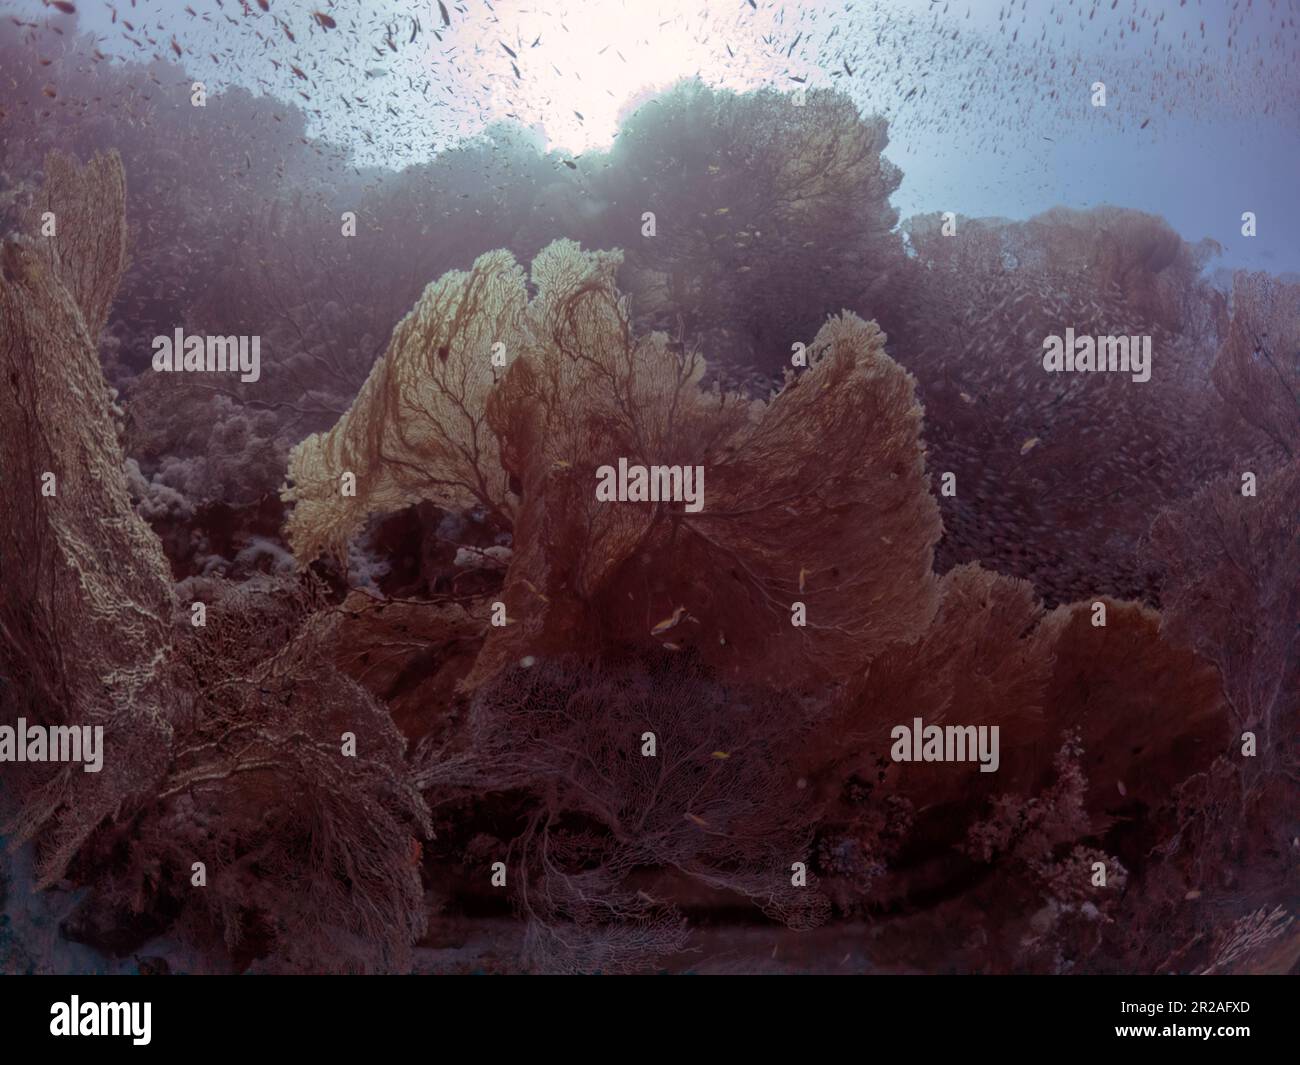 Fans des Gorgonien-Meeres (Subergorgia hicksoni) im Roten Meer, Ägypten Stockfoto